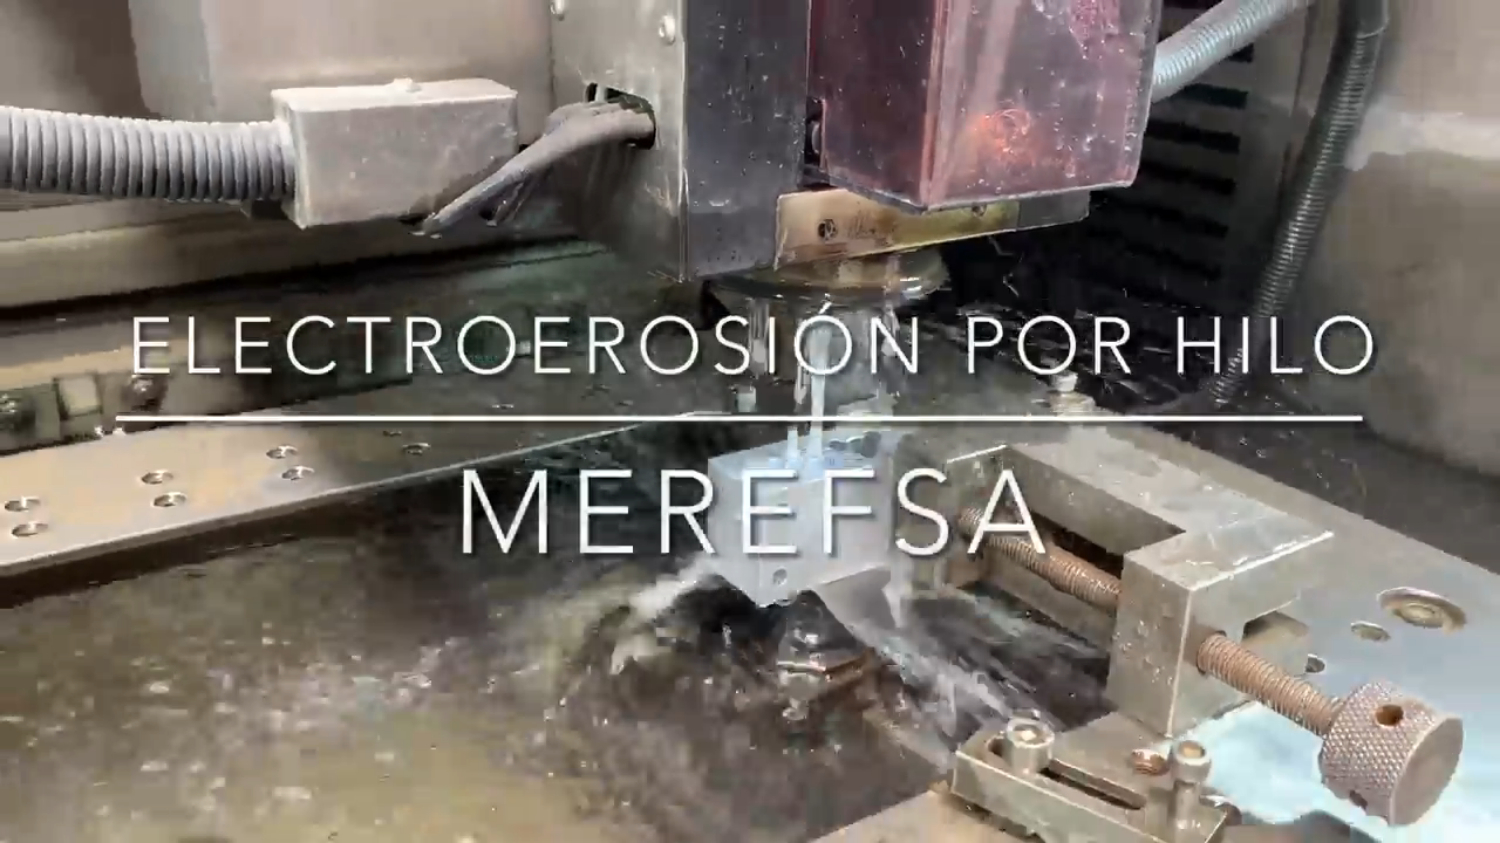 Machining process in MEREFSA: WIRE EDM